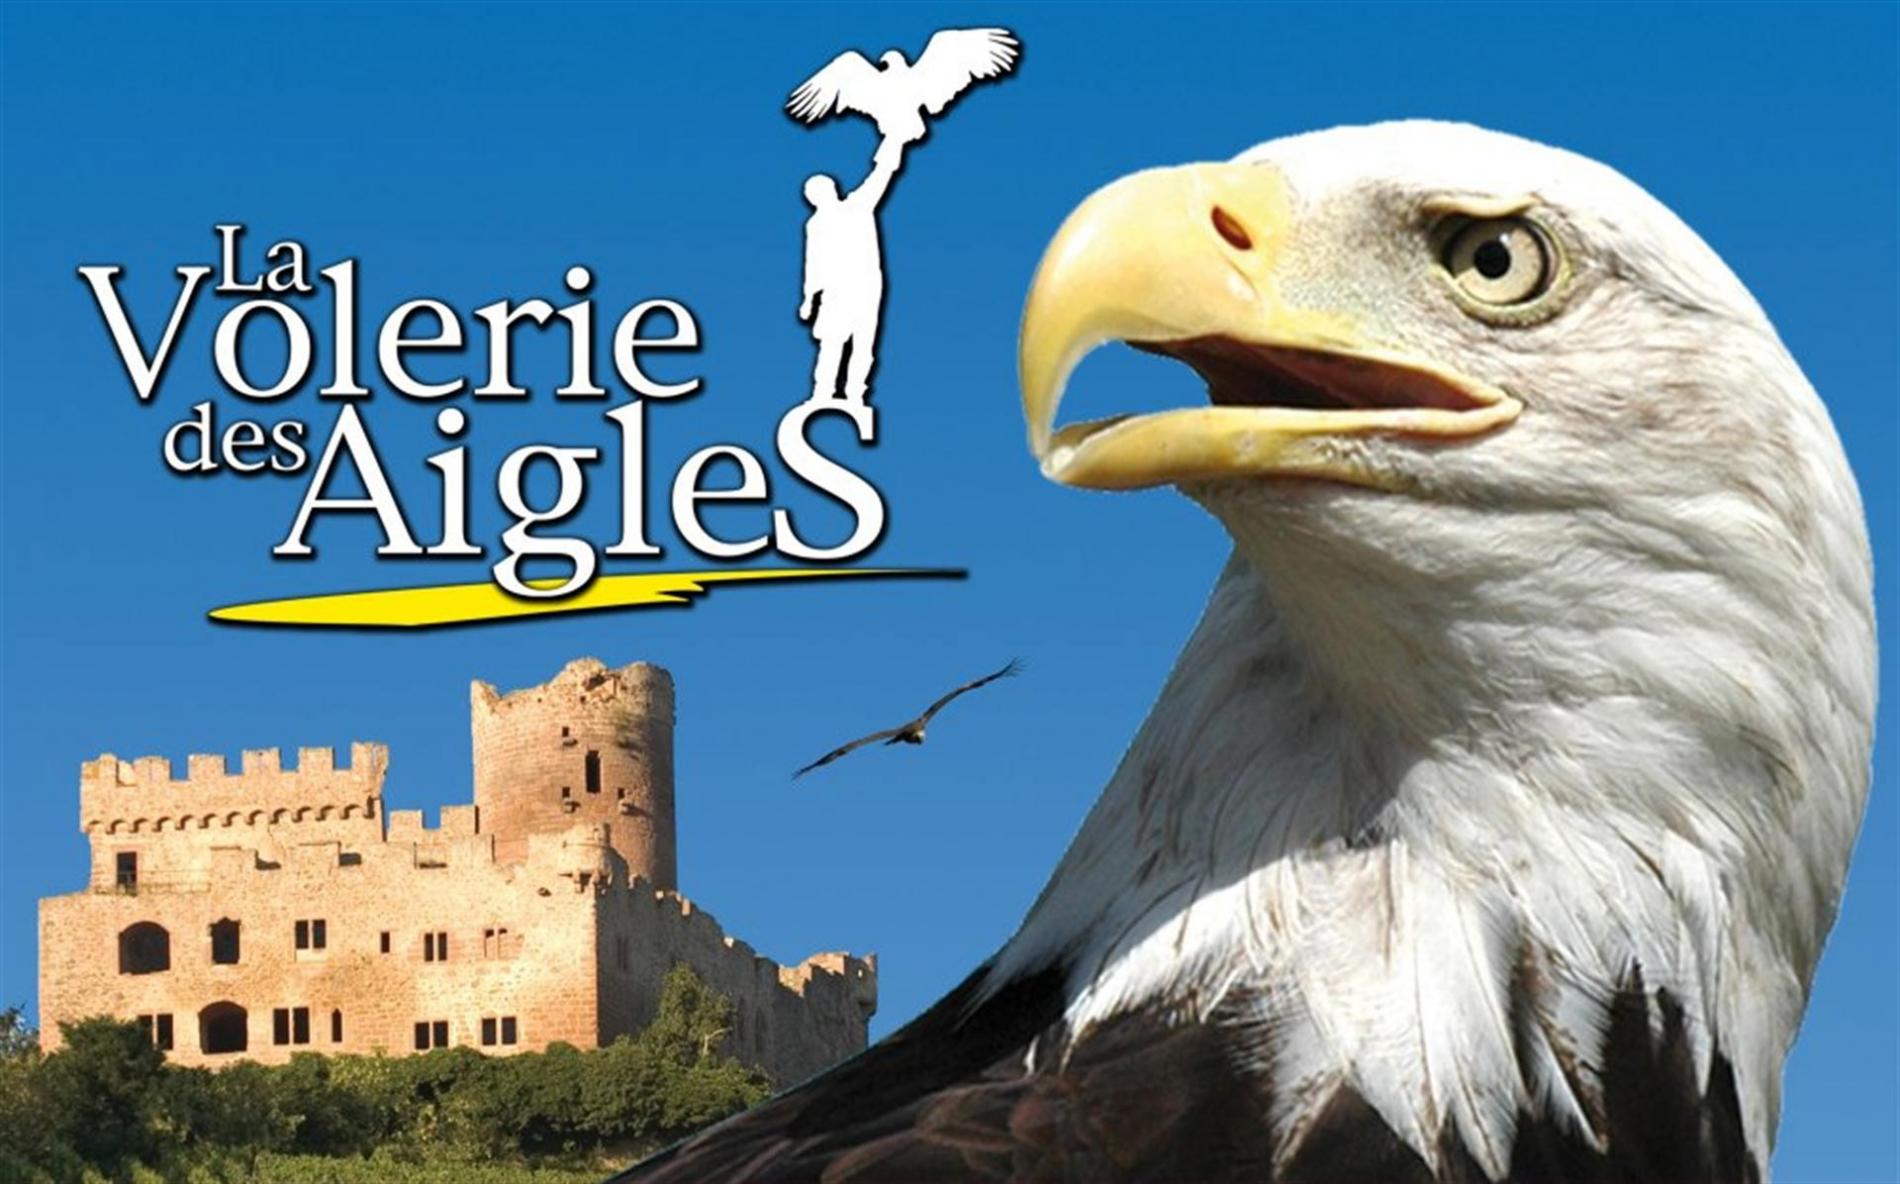 The eagle volerie